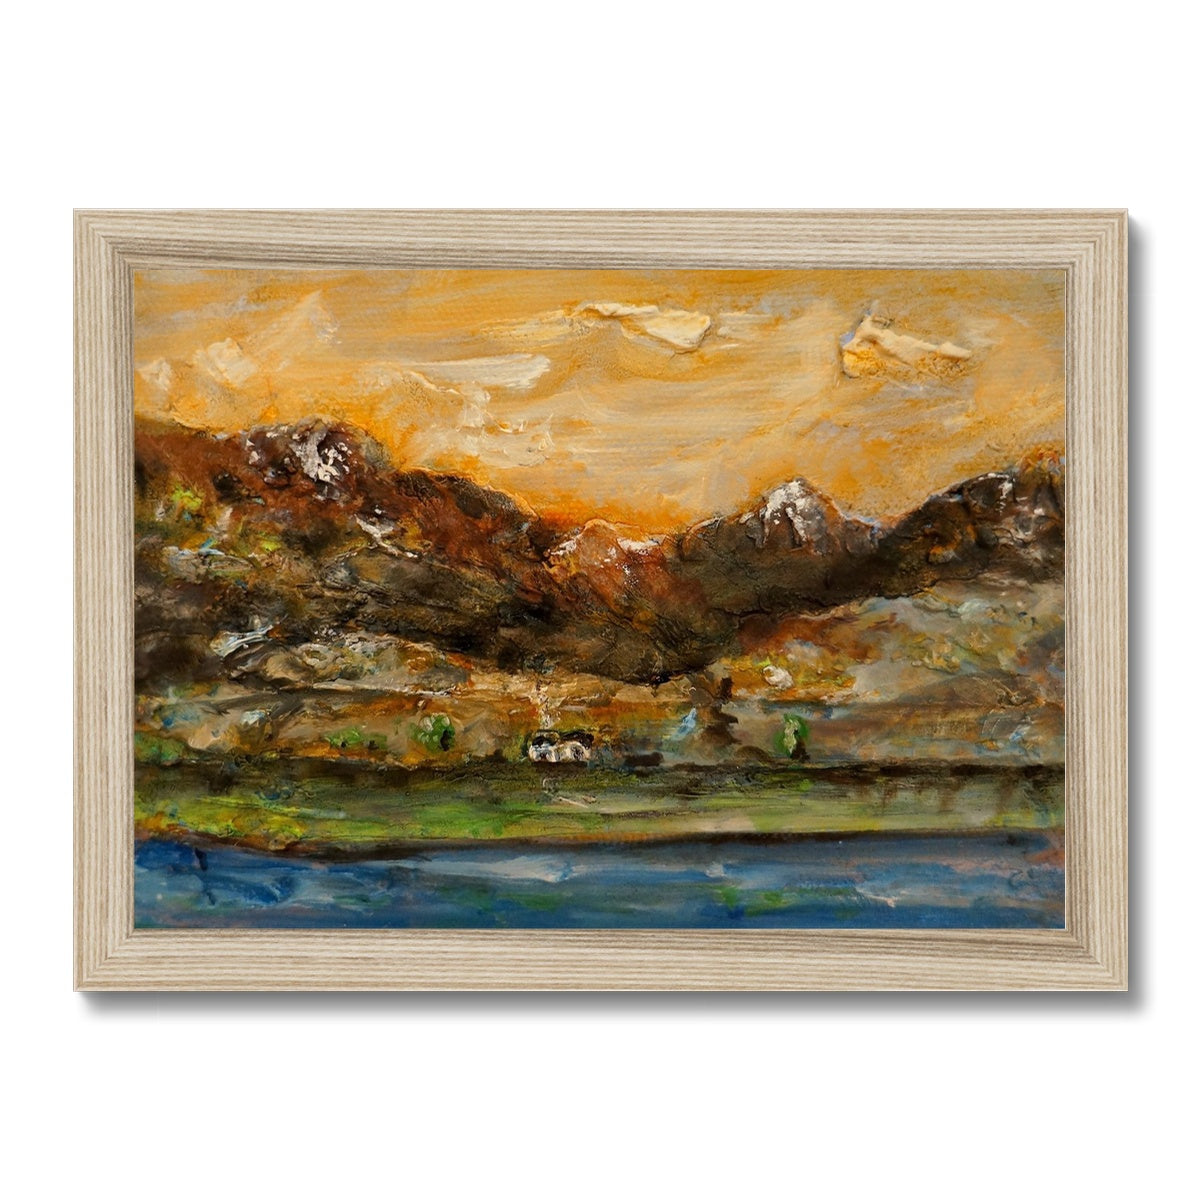 A Glencoe Cottage Painting | Framed Prints From Scotland-Framed Prints-Glencoe Art Gallery-A4 Landscape-Natural Frame-Paintings, Prints, Homeware, Art Gifts From Scotland By Scottish Artist Kevin Hunter